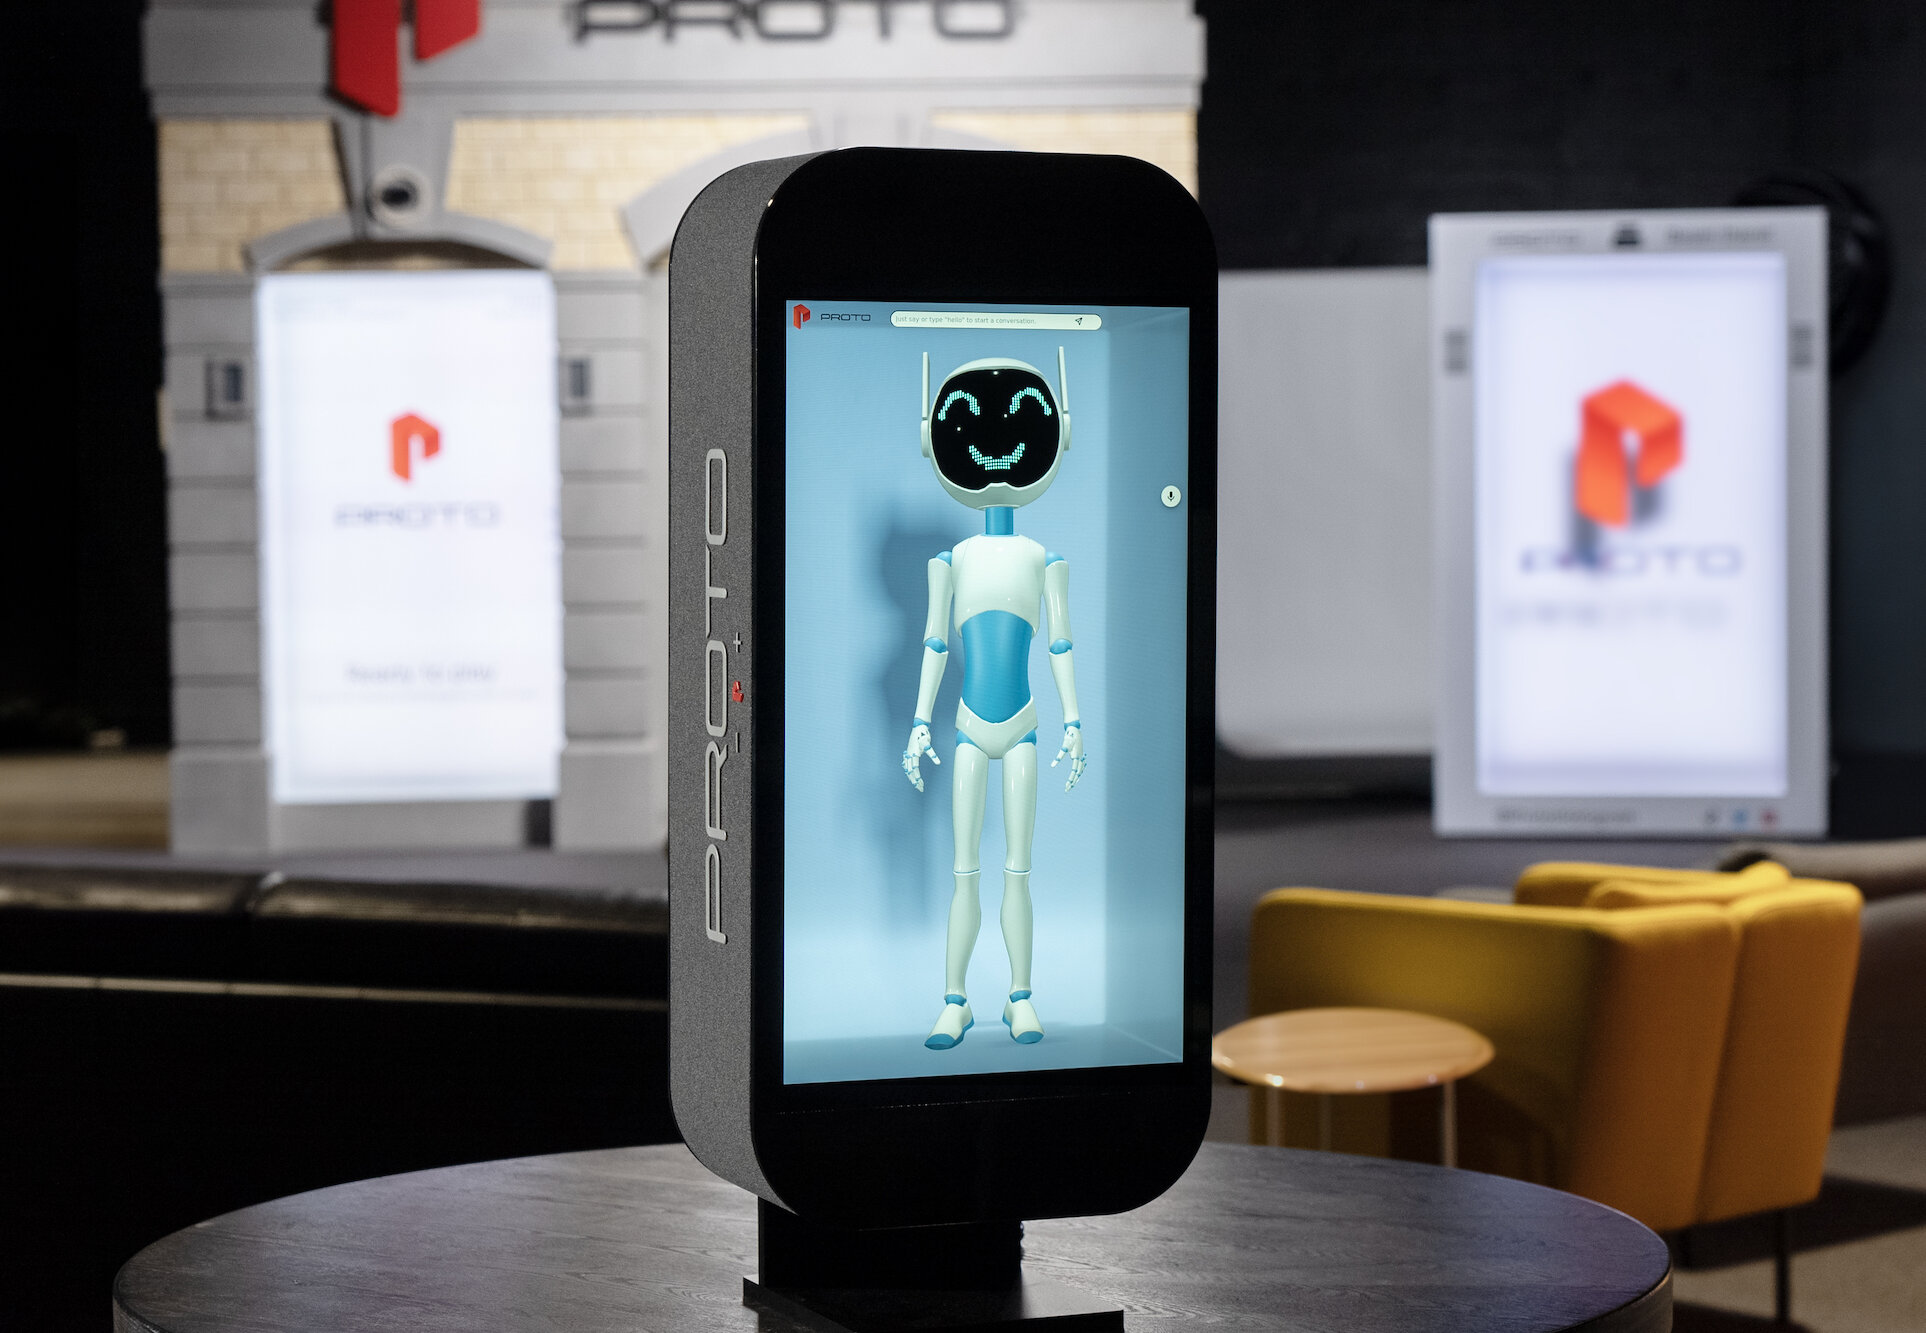 Conversational AI holograms like ProtoBot - the way of the future?